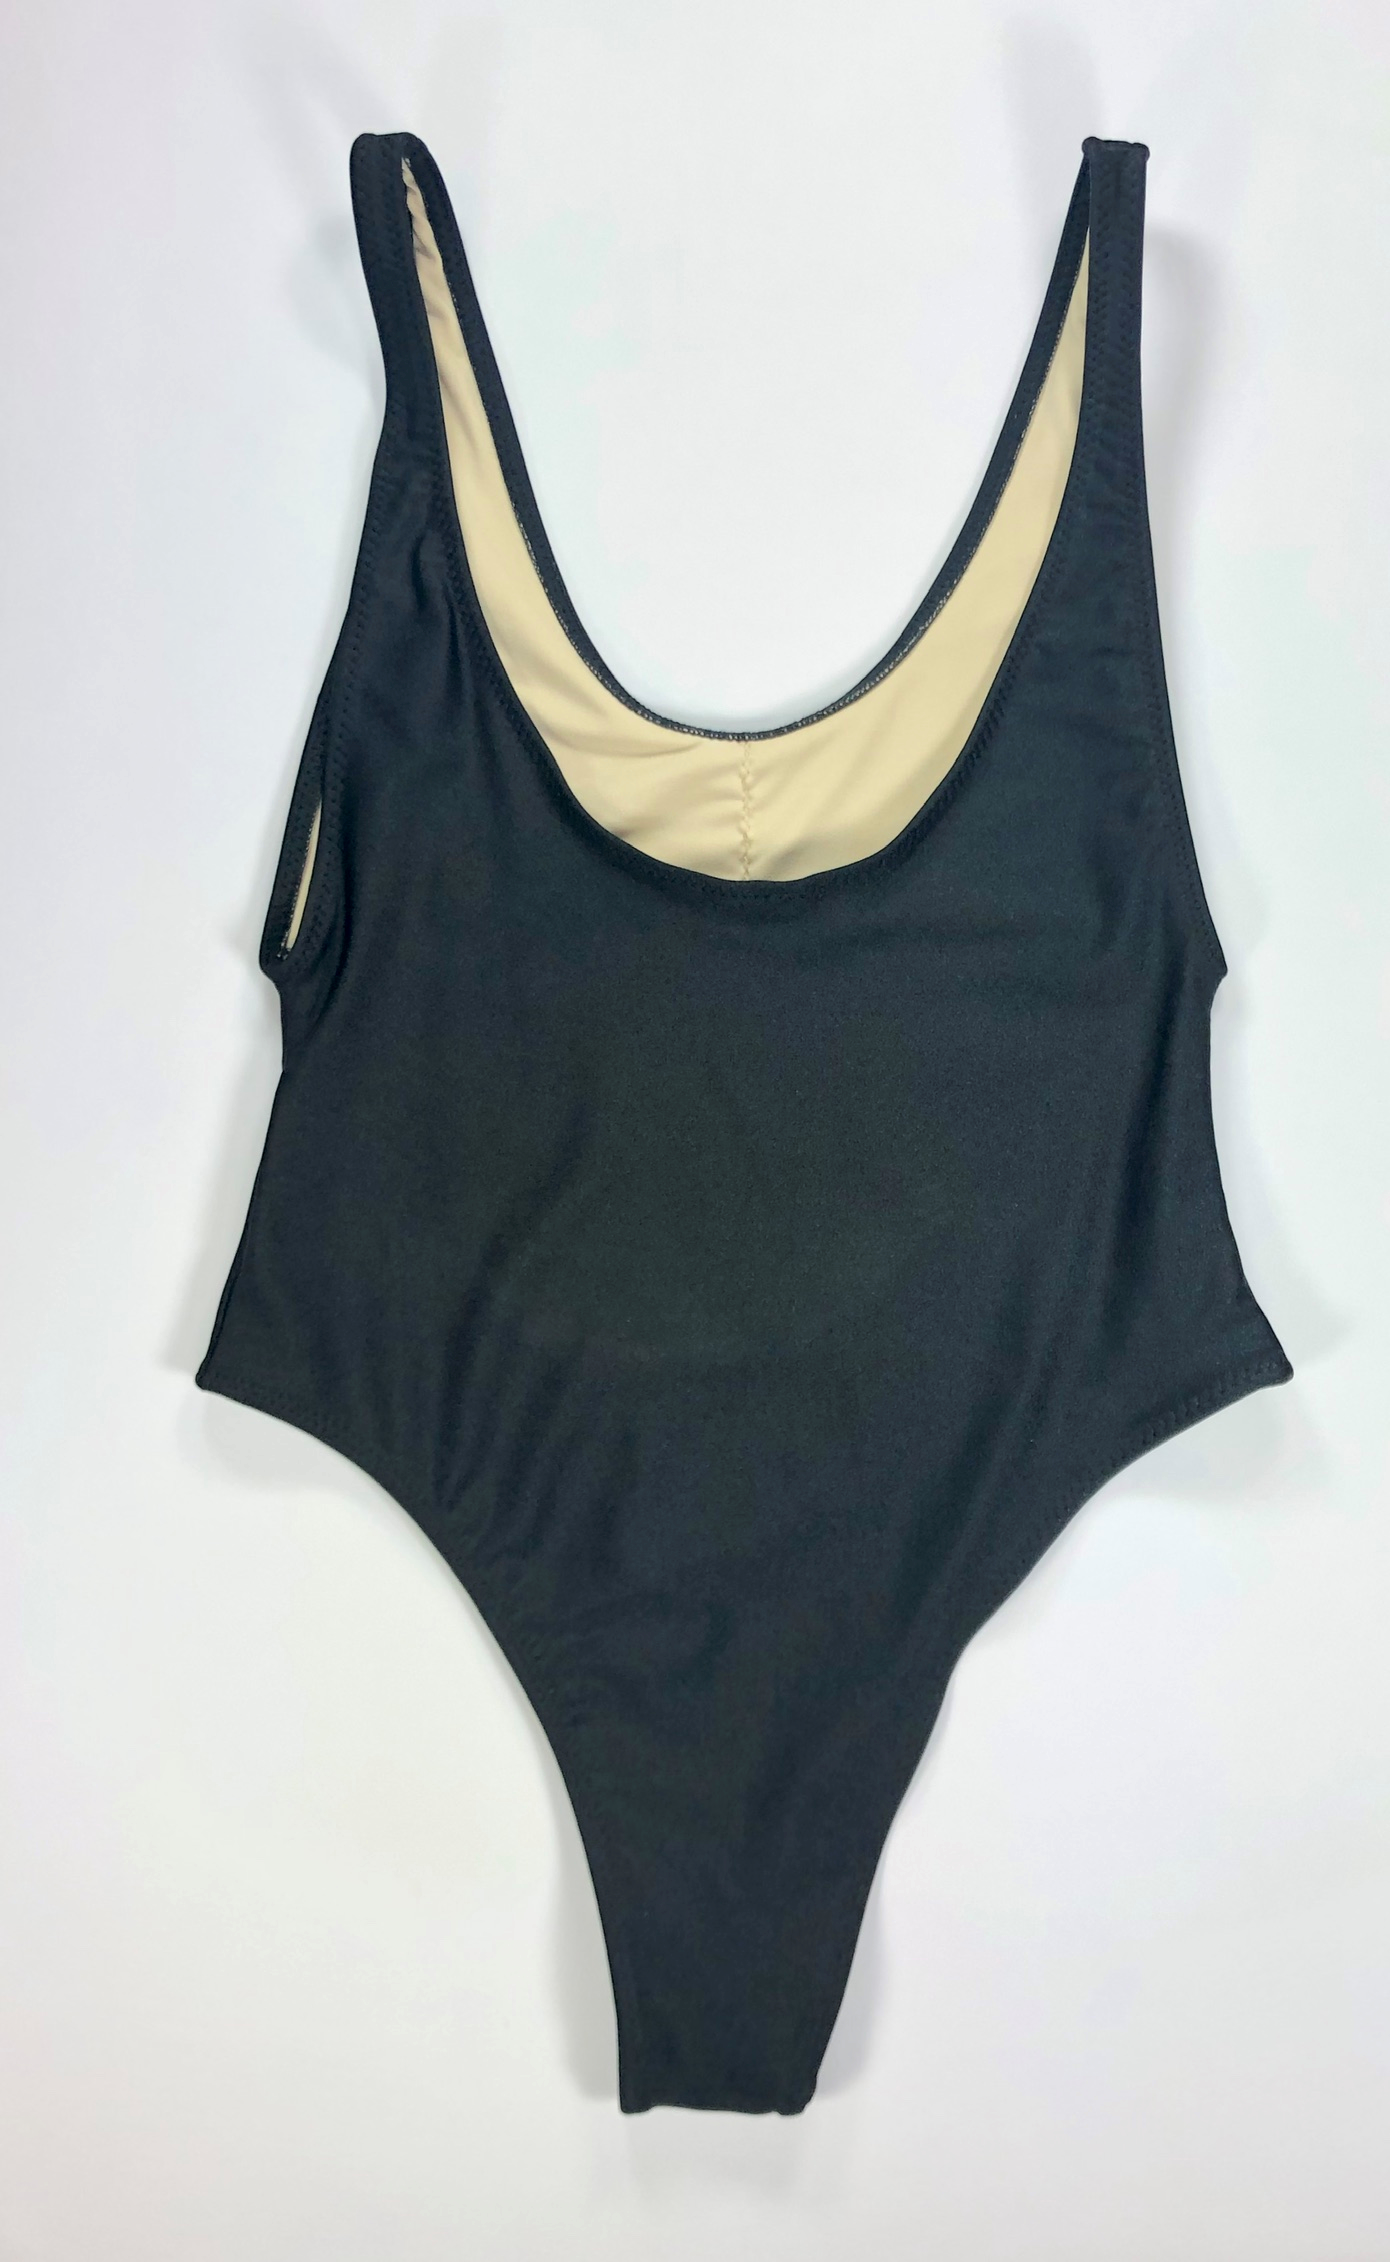 wendolin-designs - Wendolin Designs - Swimsuit - One Piece Swimsuit Color Black